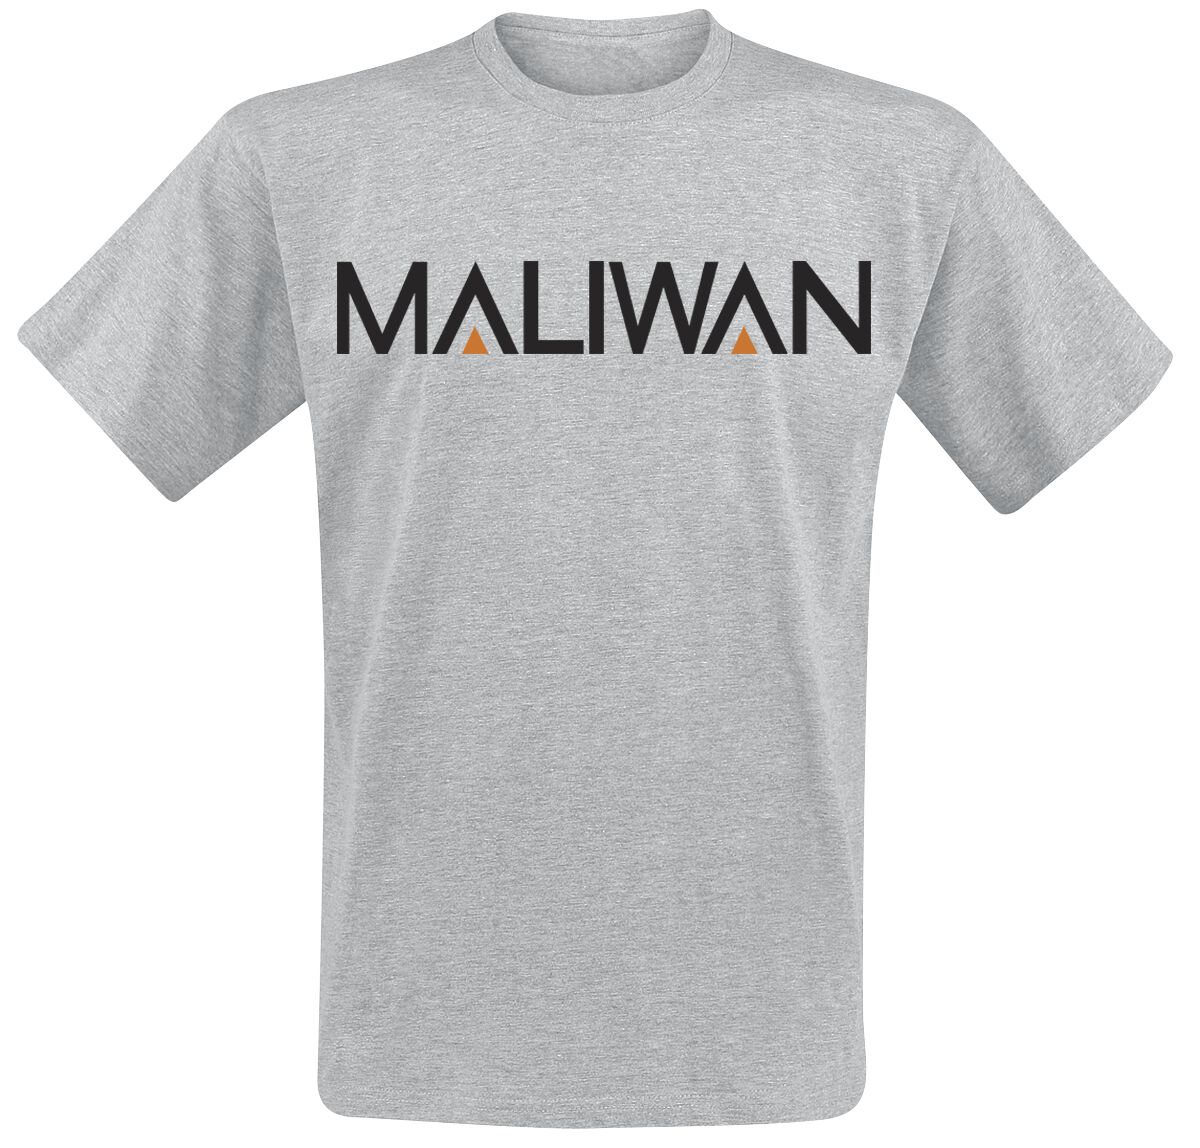 Borderlands 3 - Maliwan T-Shirt grau meliert in M